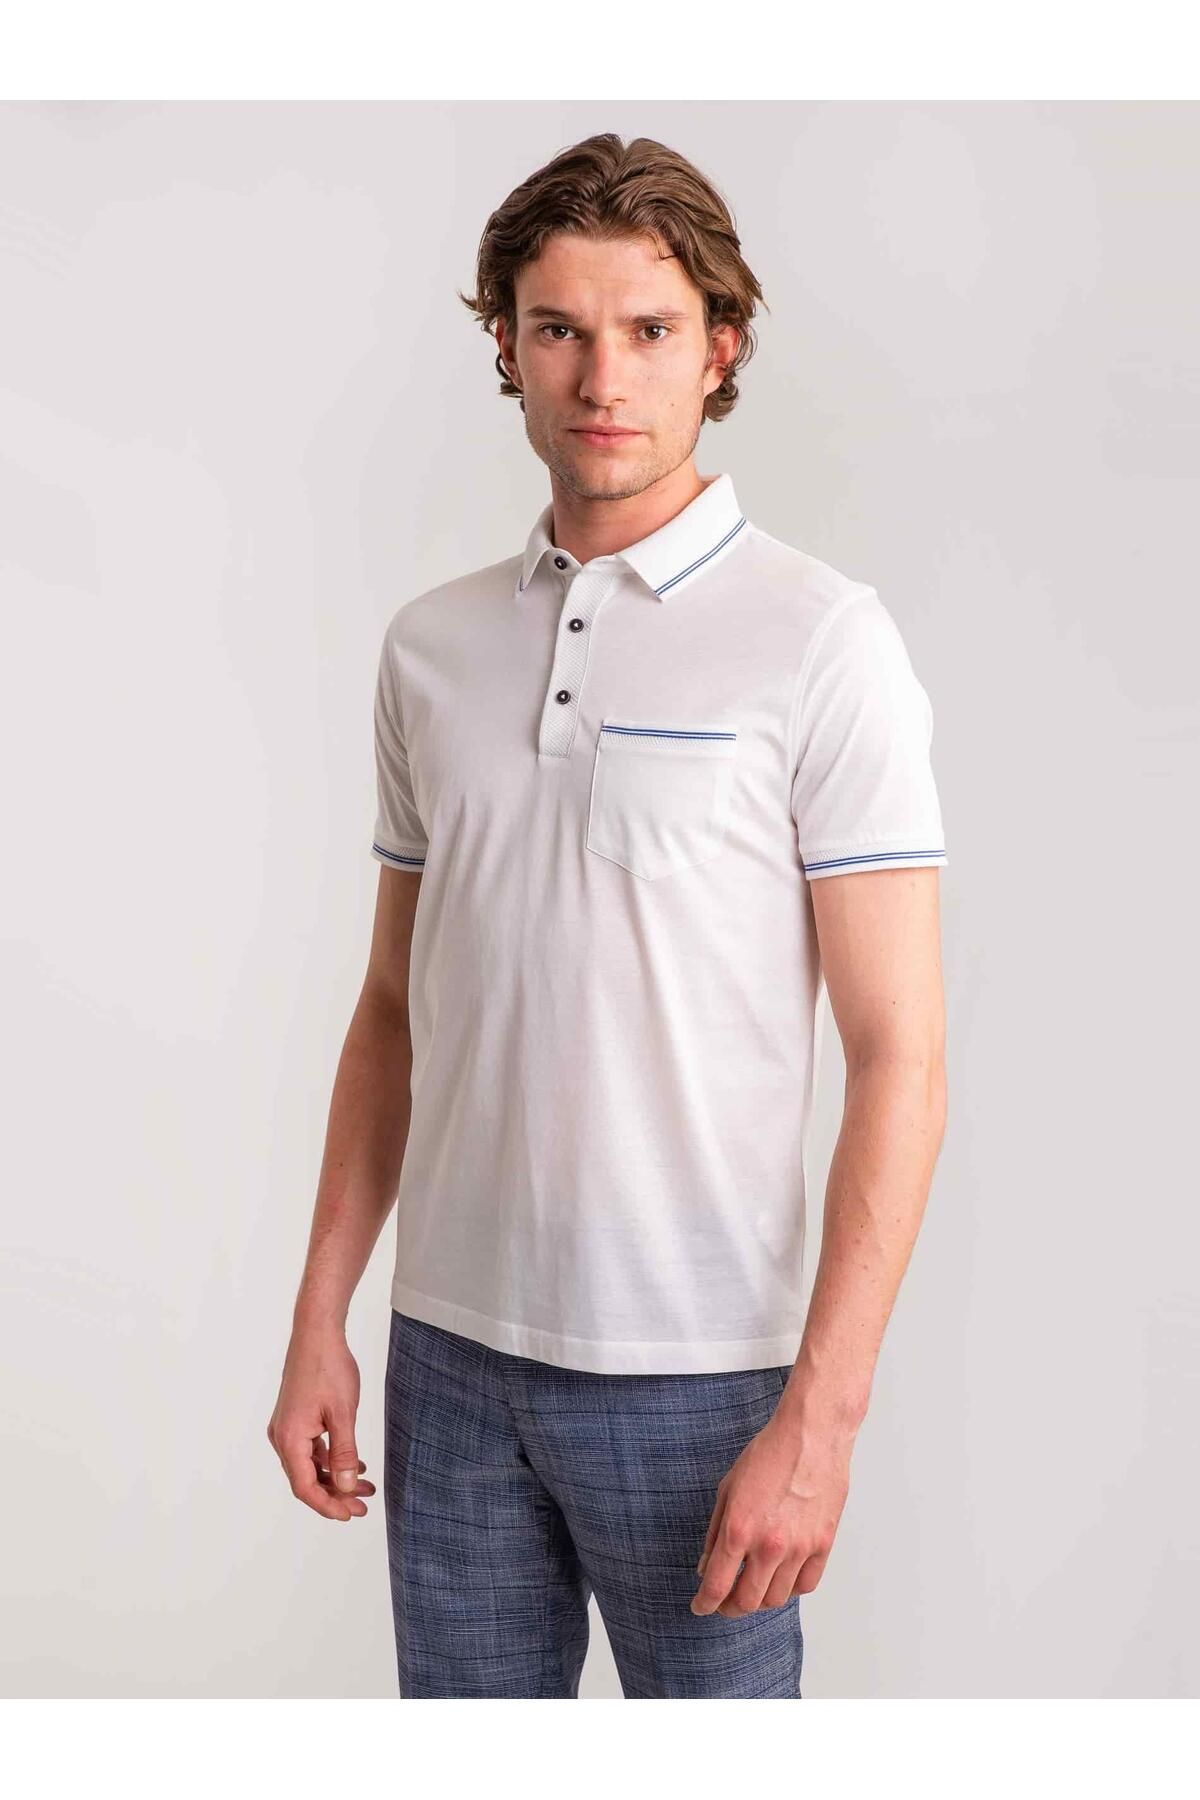 Dufy Beyaz Erkek Regular Fit Düz Casual Polo Yaka Tshirt - 54940